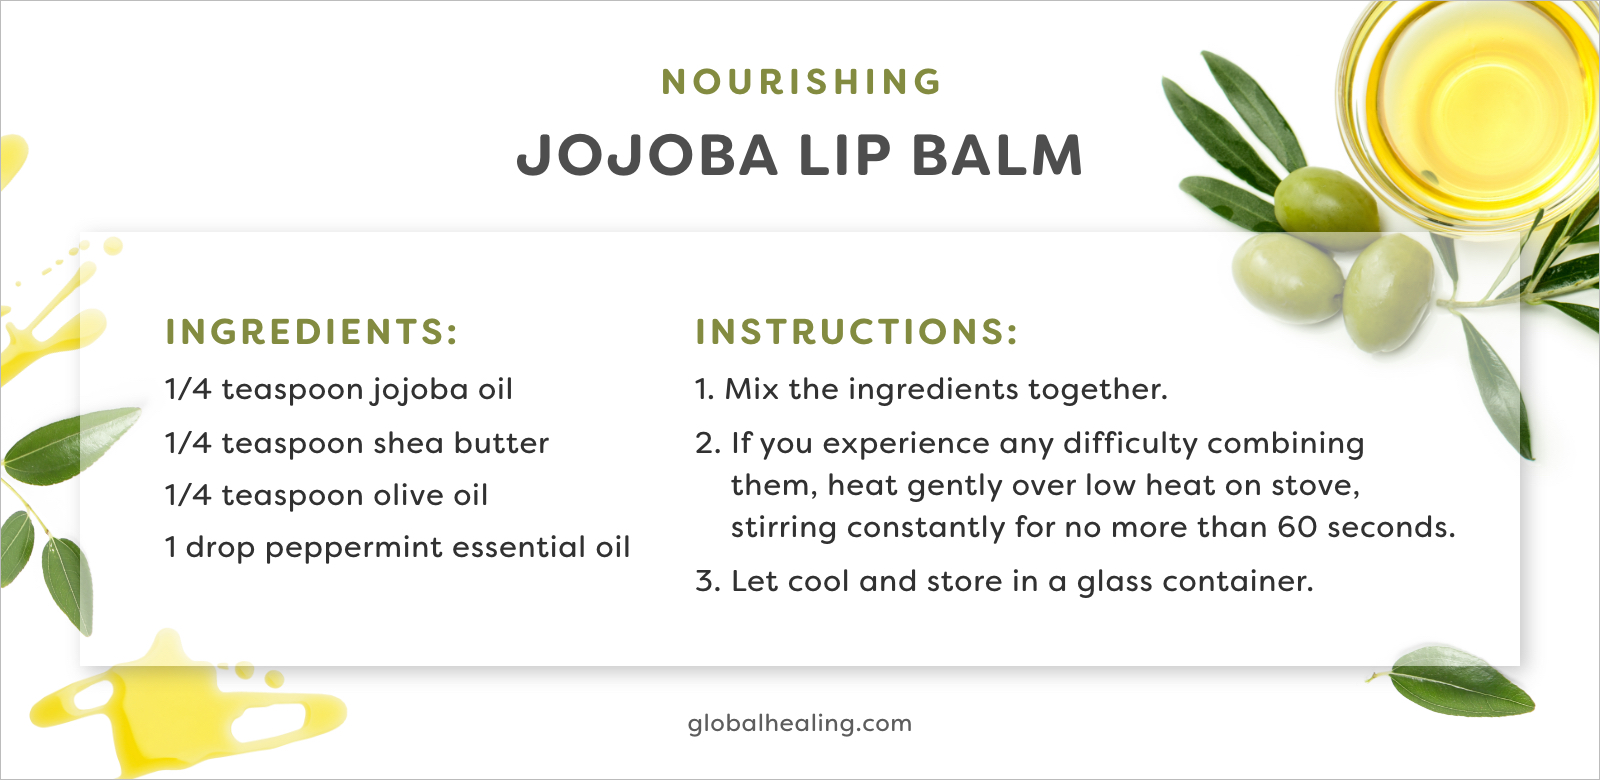 Try this nourishing jojoba lip balm recipe for smooth lips.